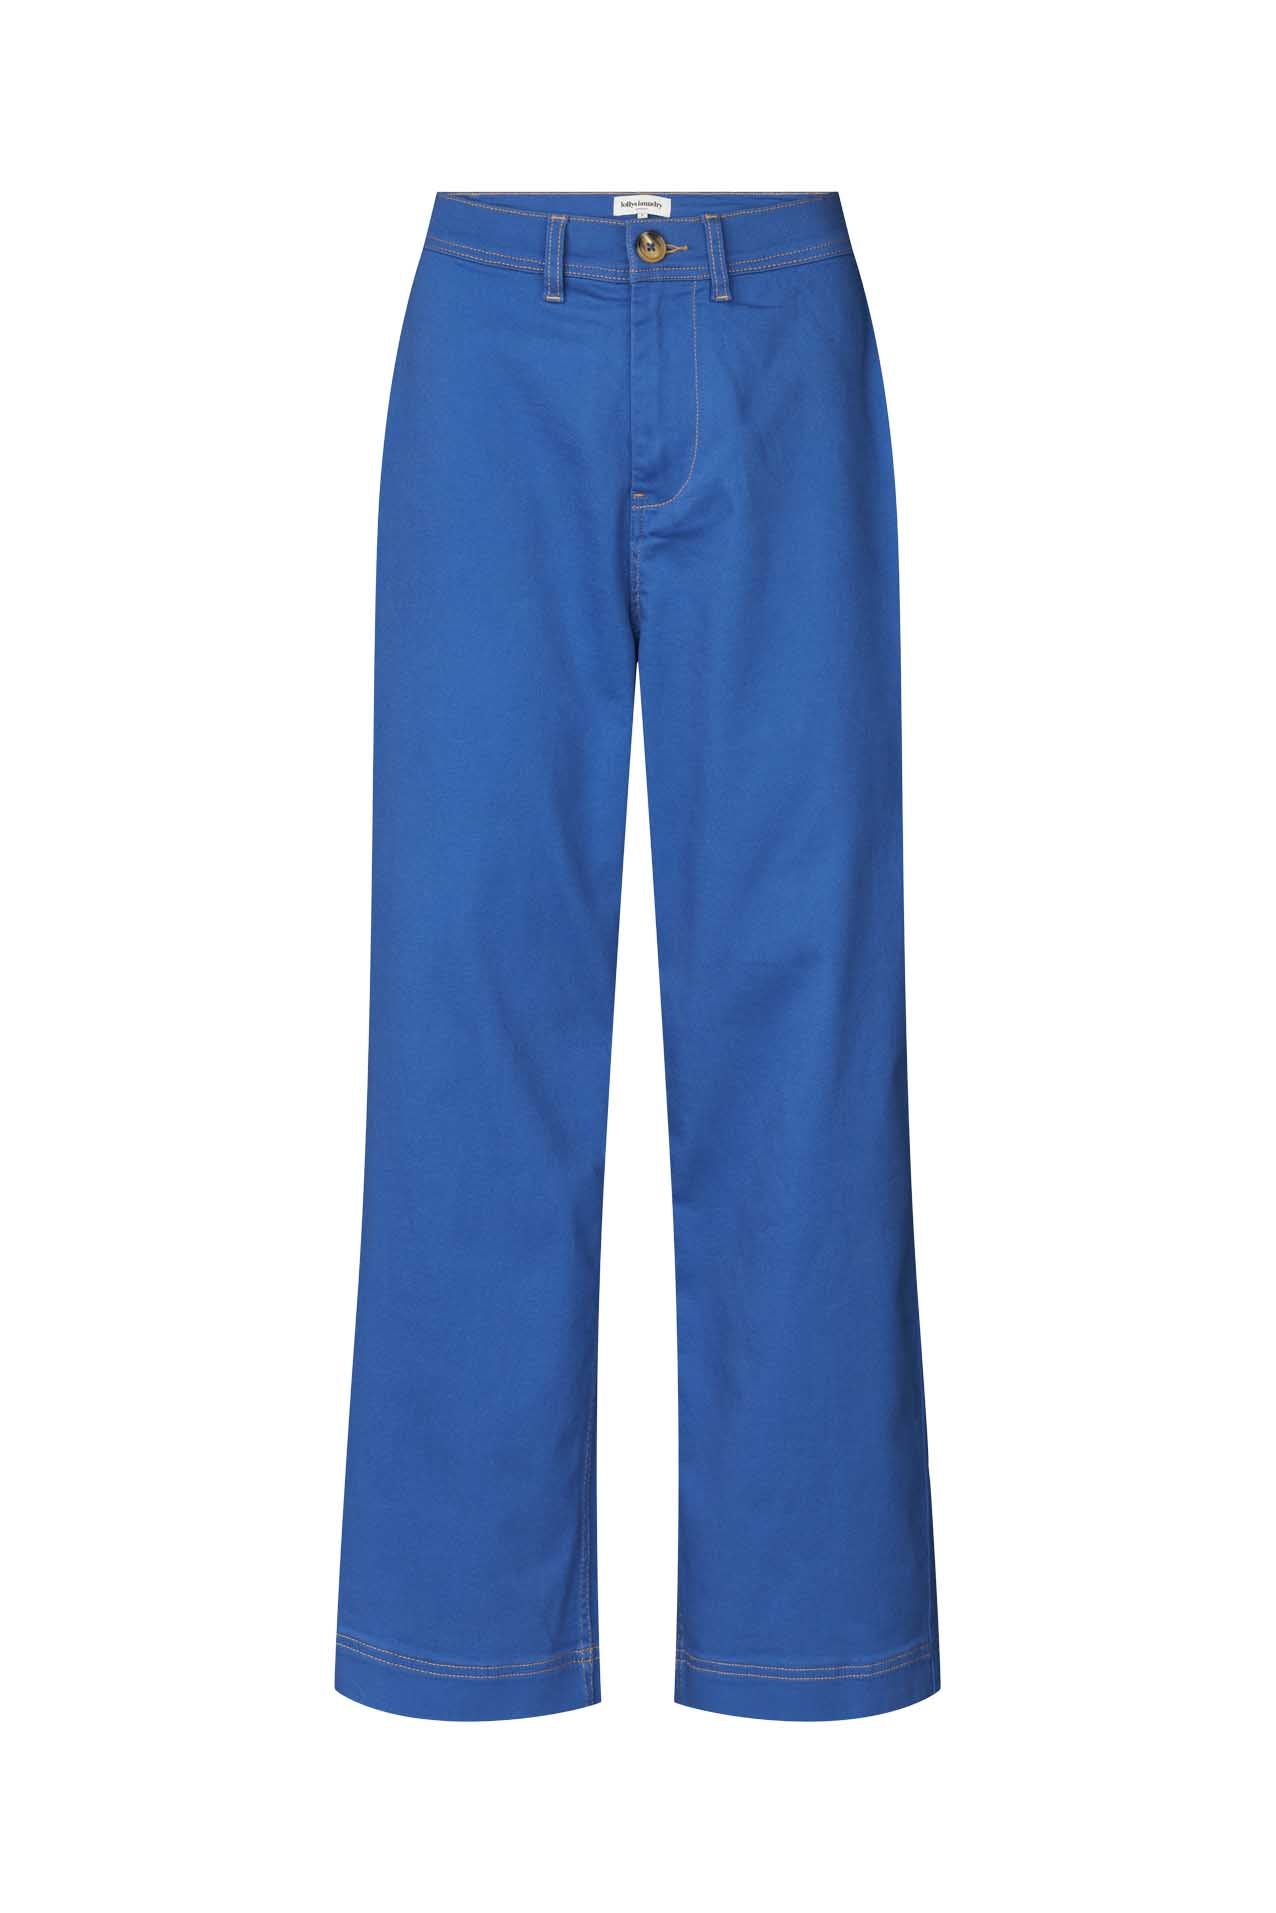 Lollys Laundry Florida Pants - Blue